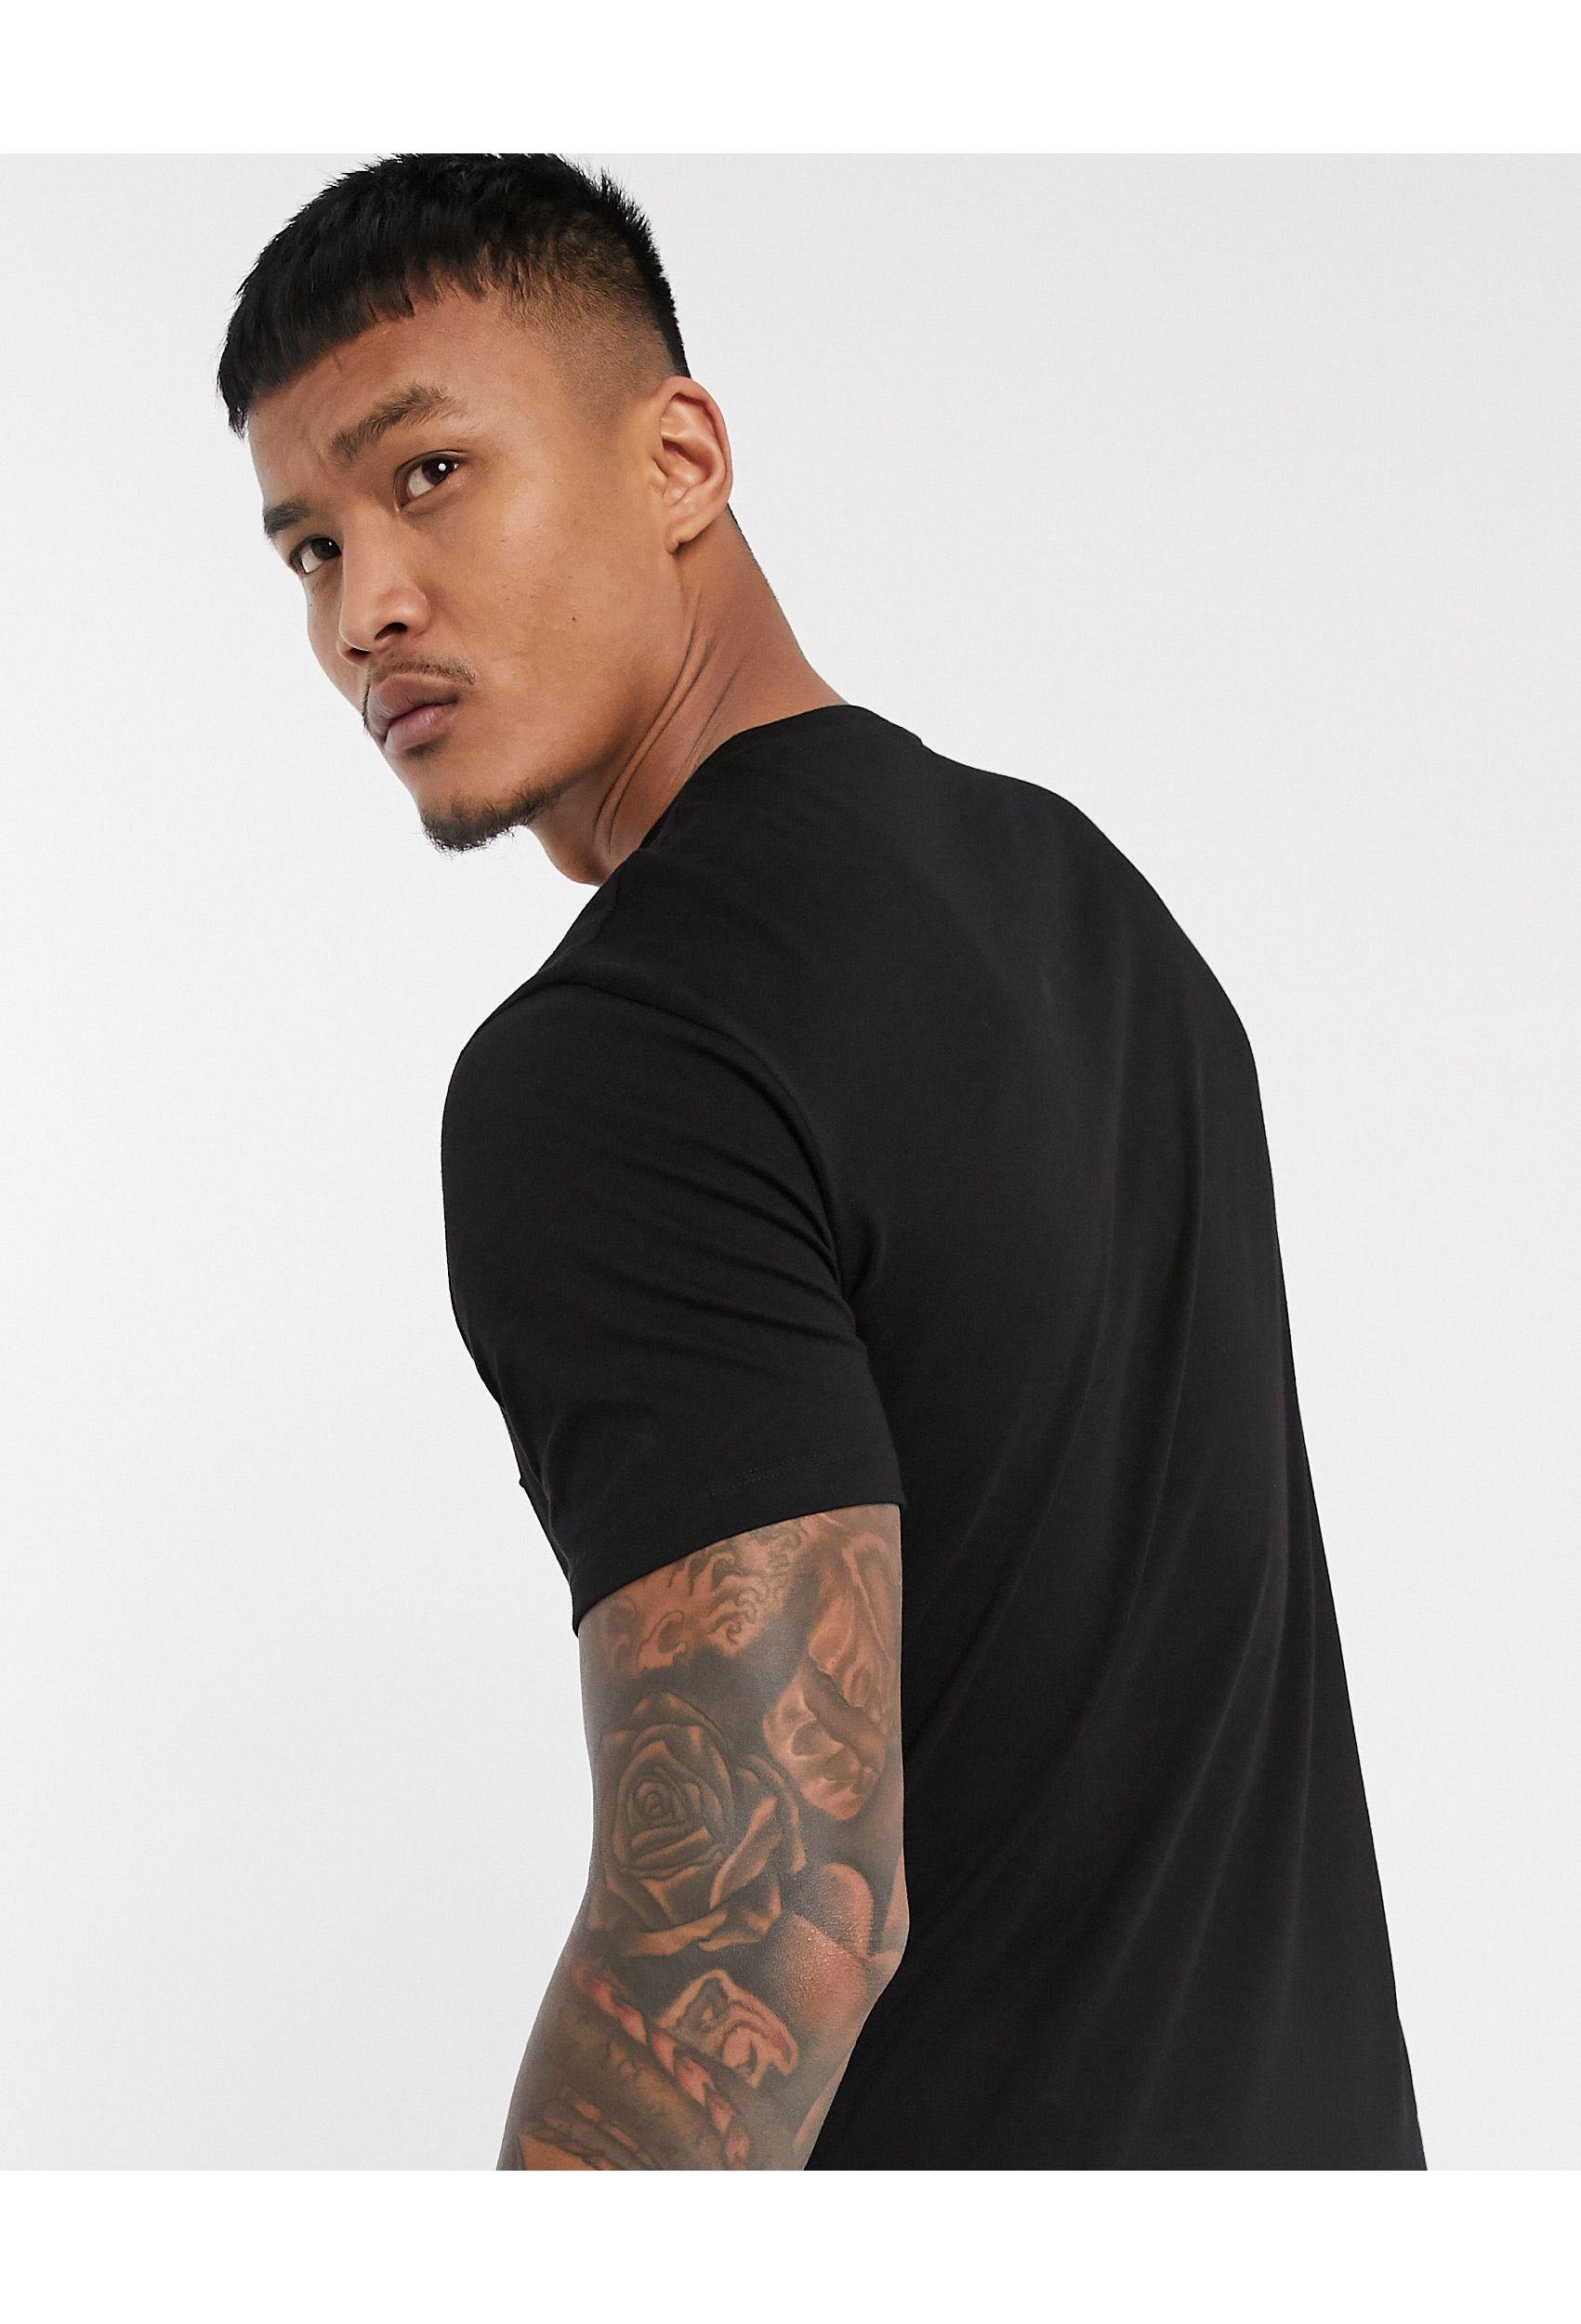 Armani Exchange Embossed Text Logo T-shirt in Black for Men | Lyst